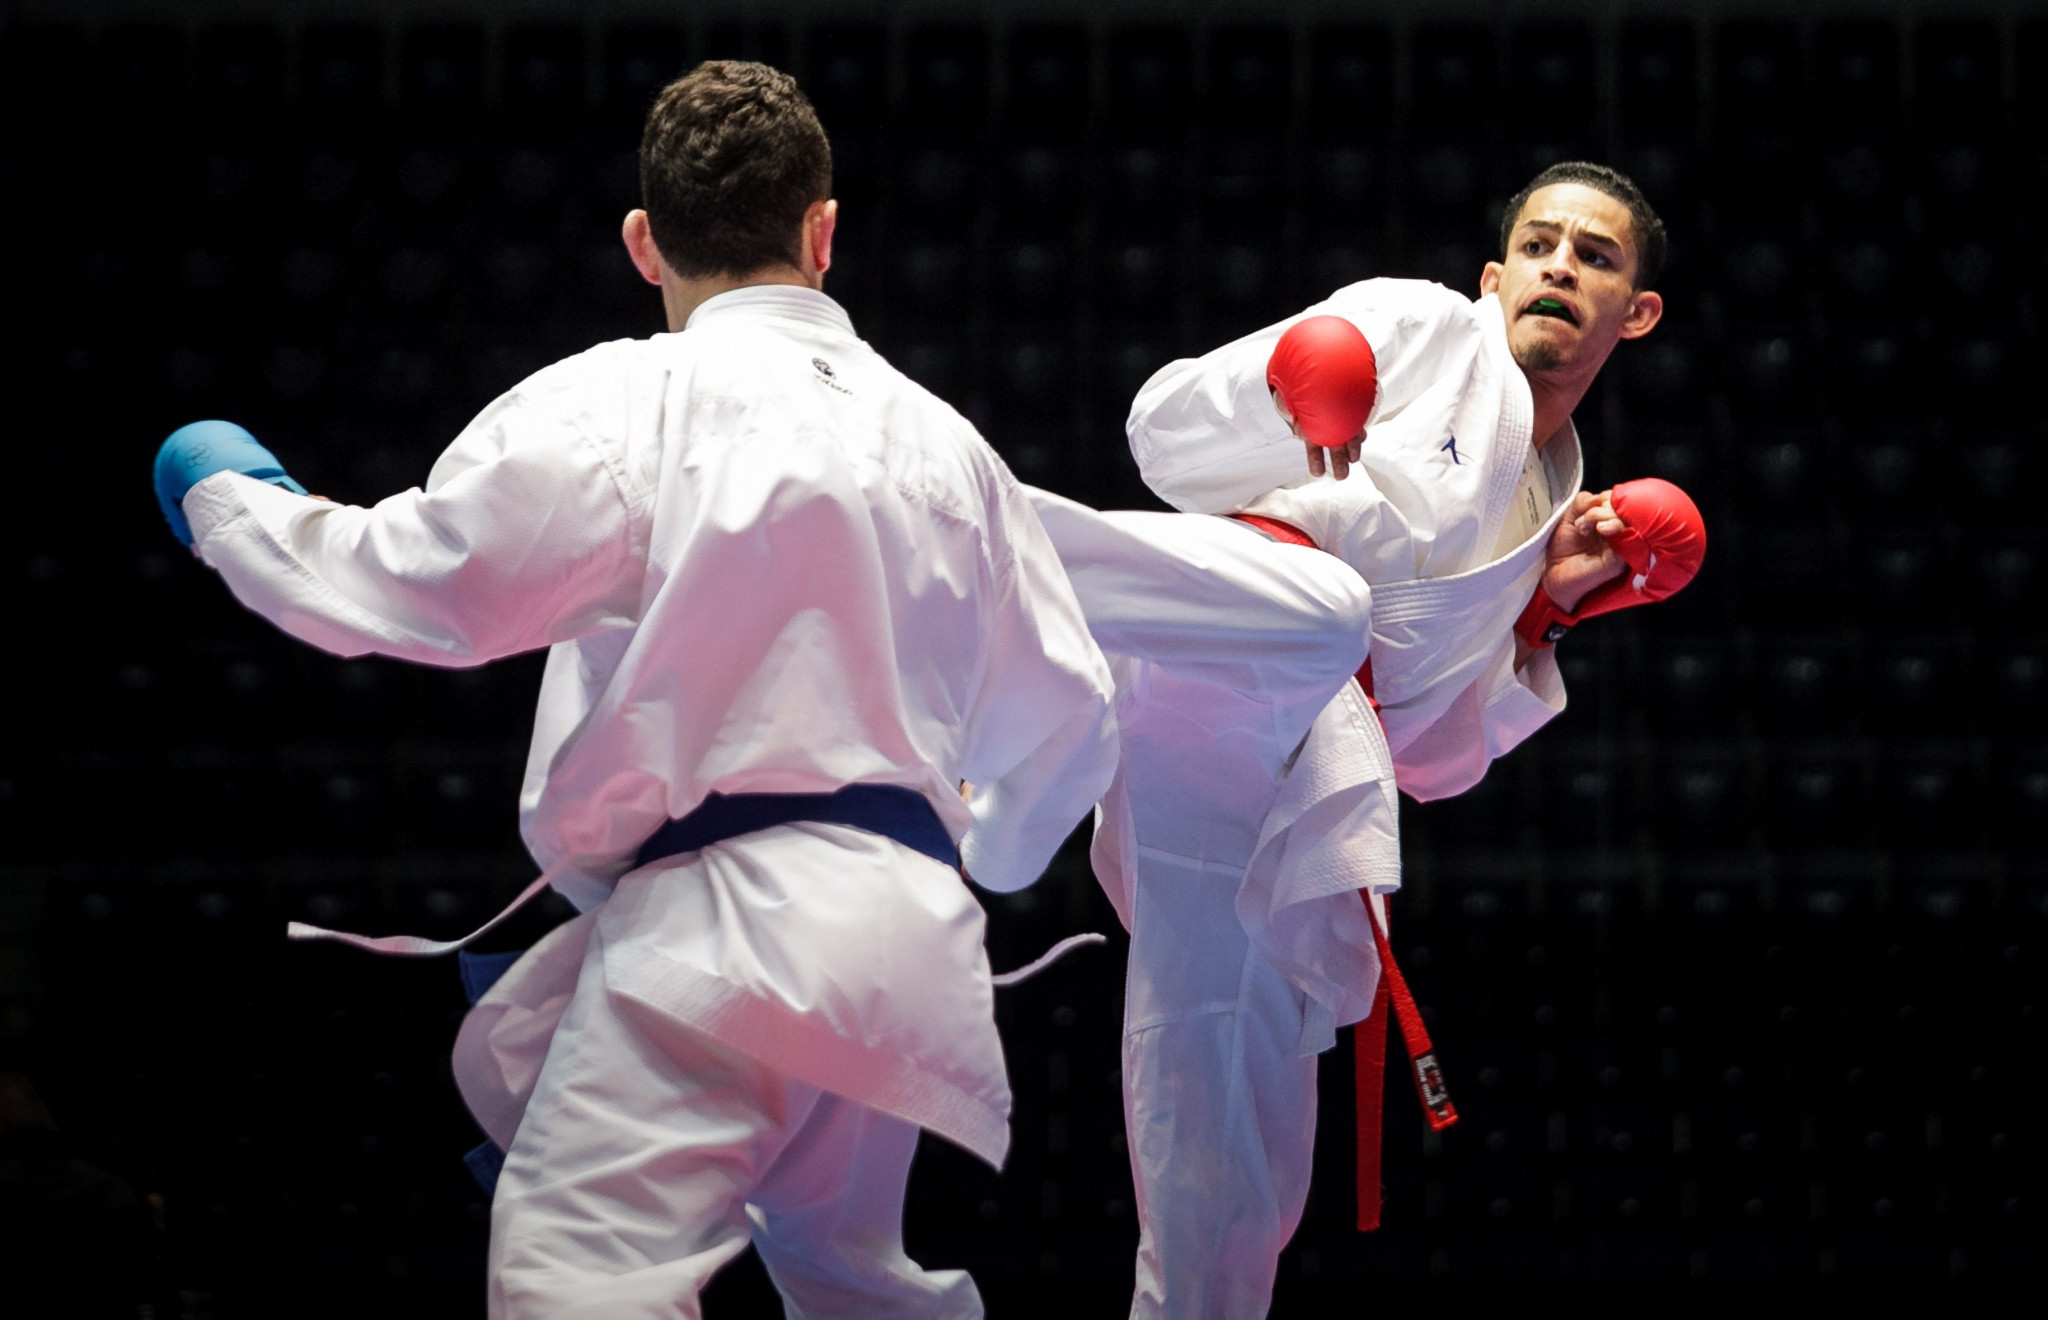 Ex-karate world champion Thomas eyes Olympic berth after switch to taekwondo